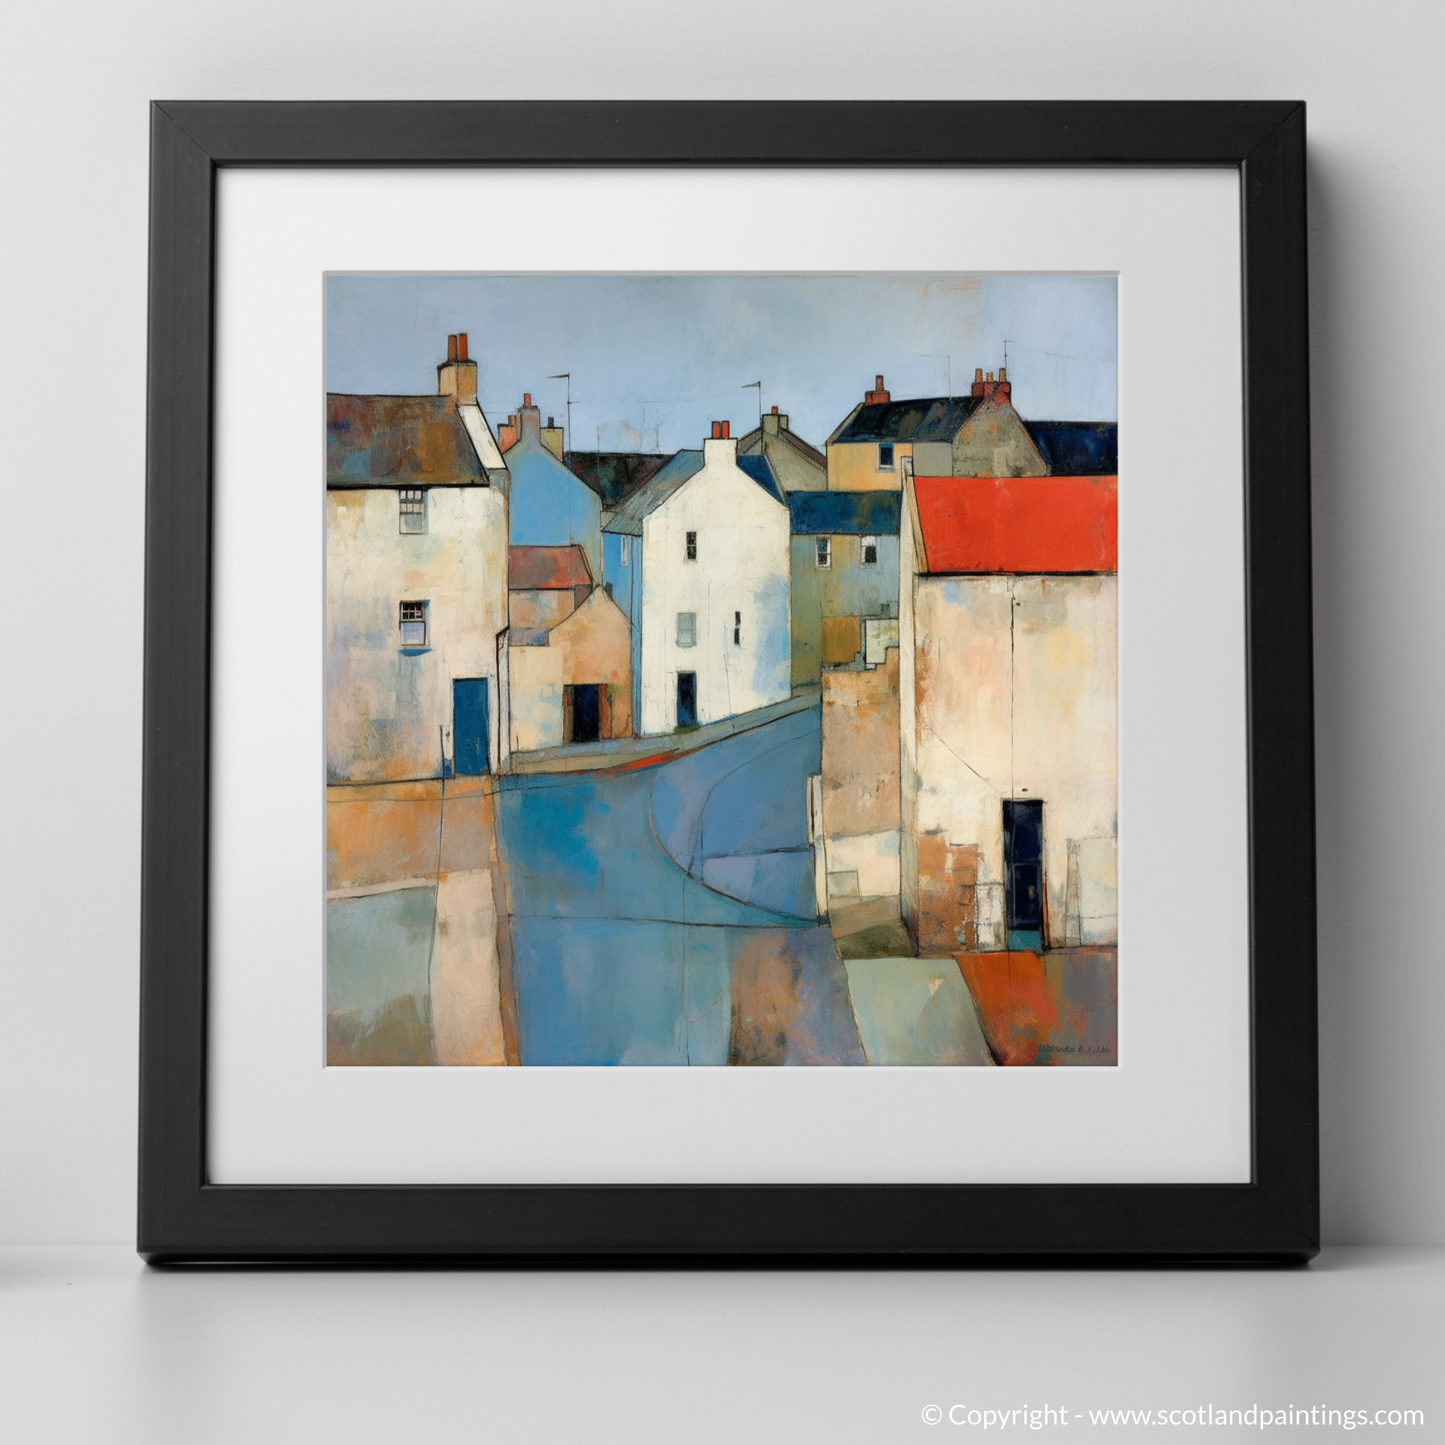 Culross Charm: An Abstract Impression of Scottish Village Splendour